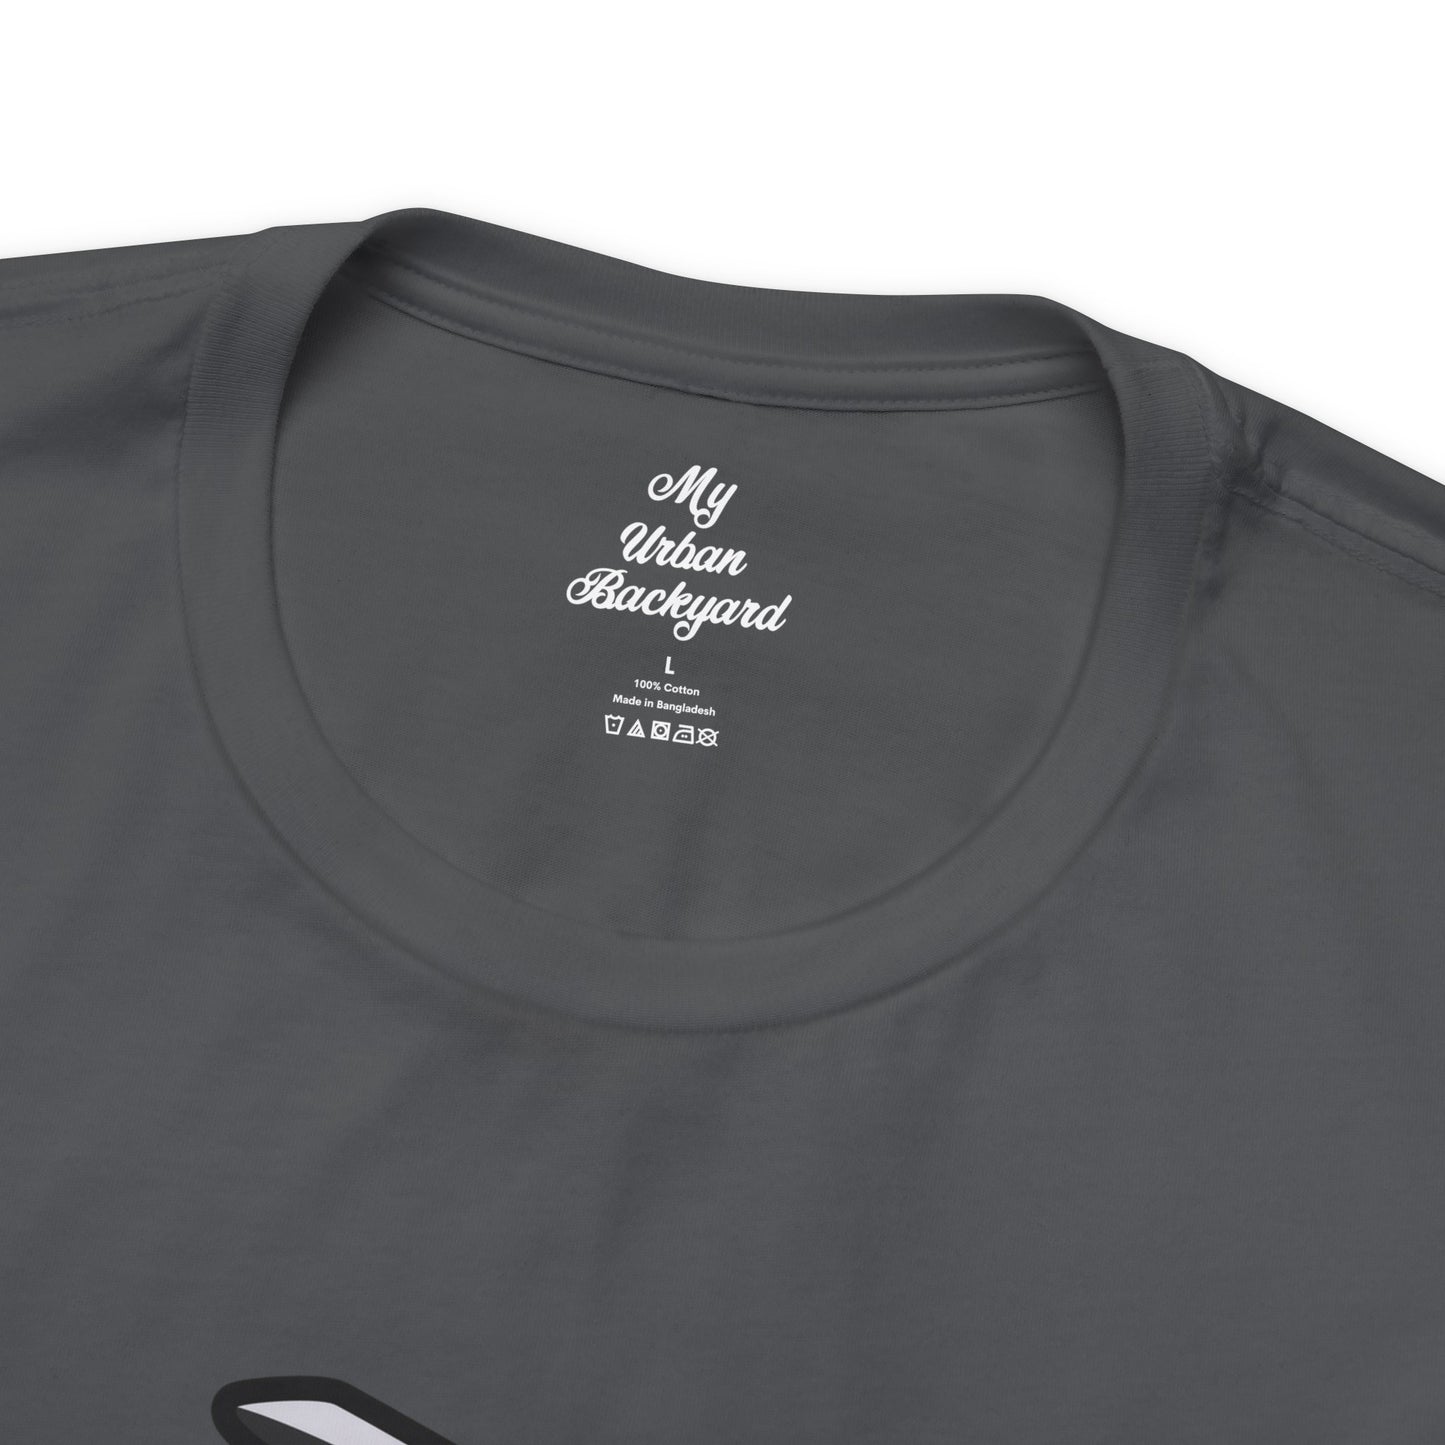 Hummingbird Duko, Soft 100% Jersey Cotton T-Shirt, Unisex, Short Sleeve, Retail Fit